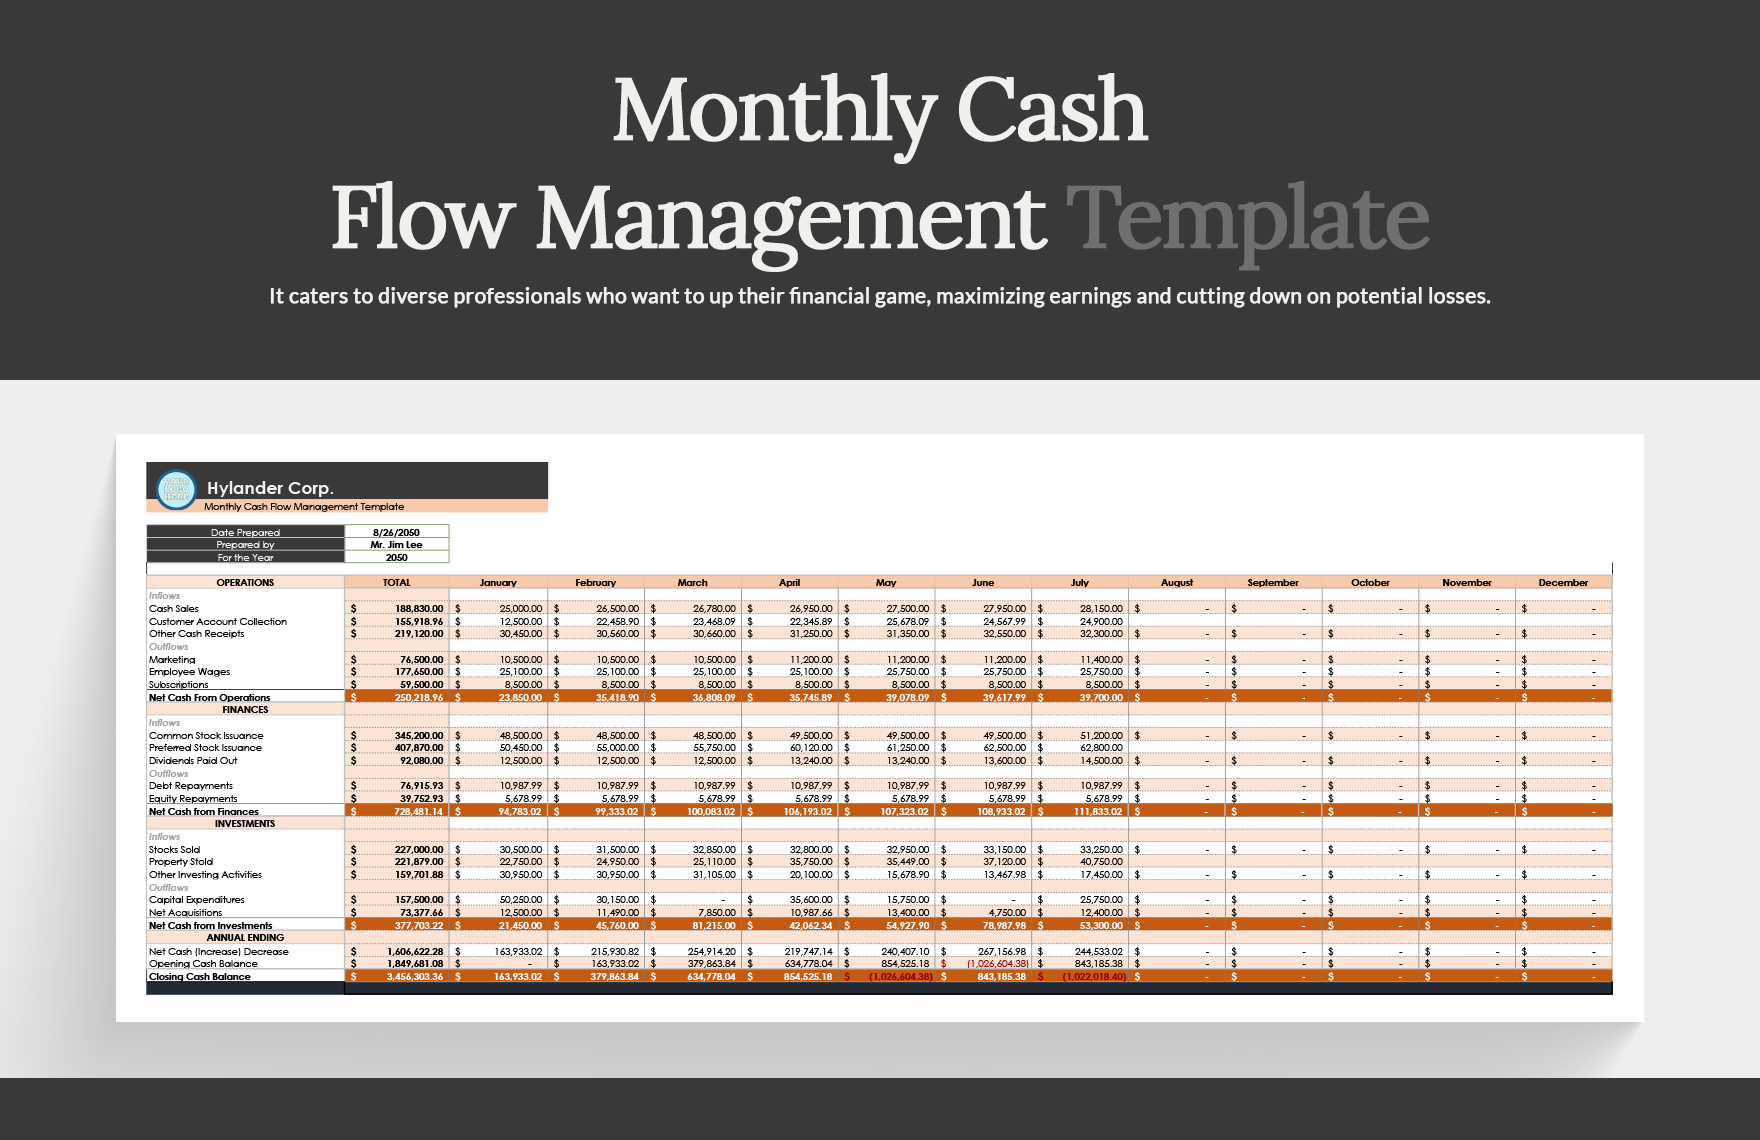 Monthly Cash Flow Management Template